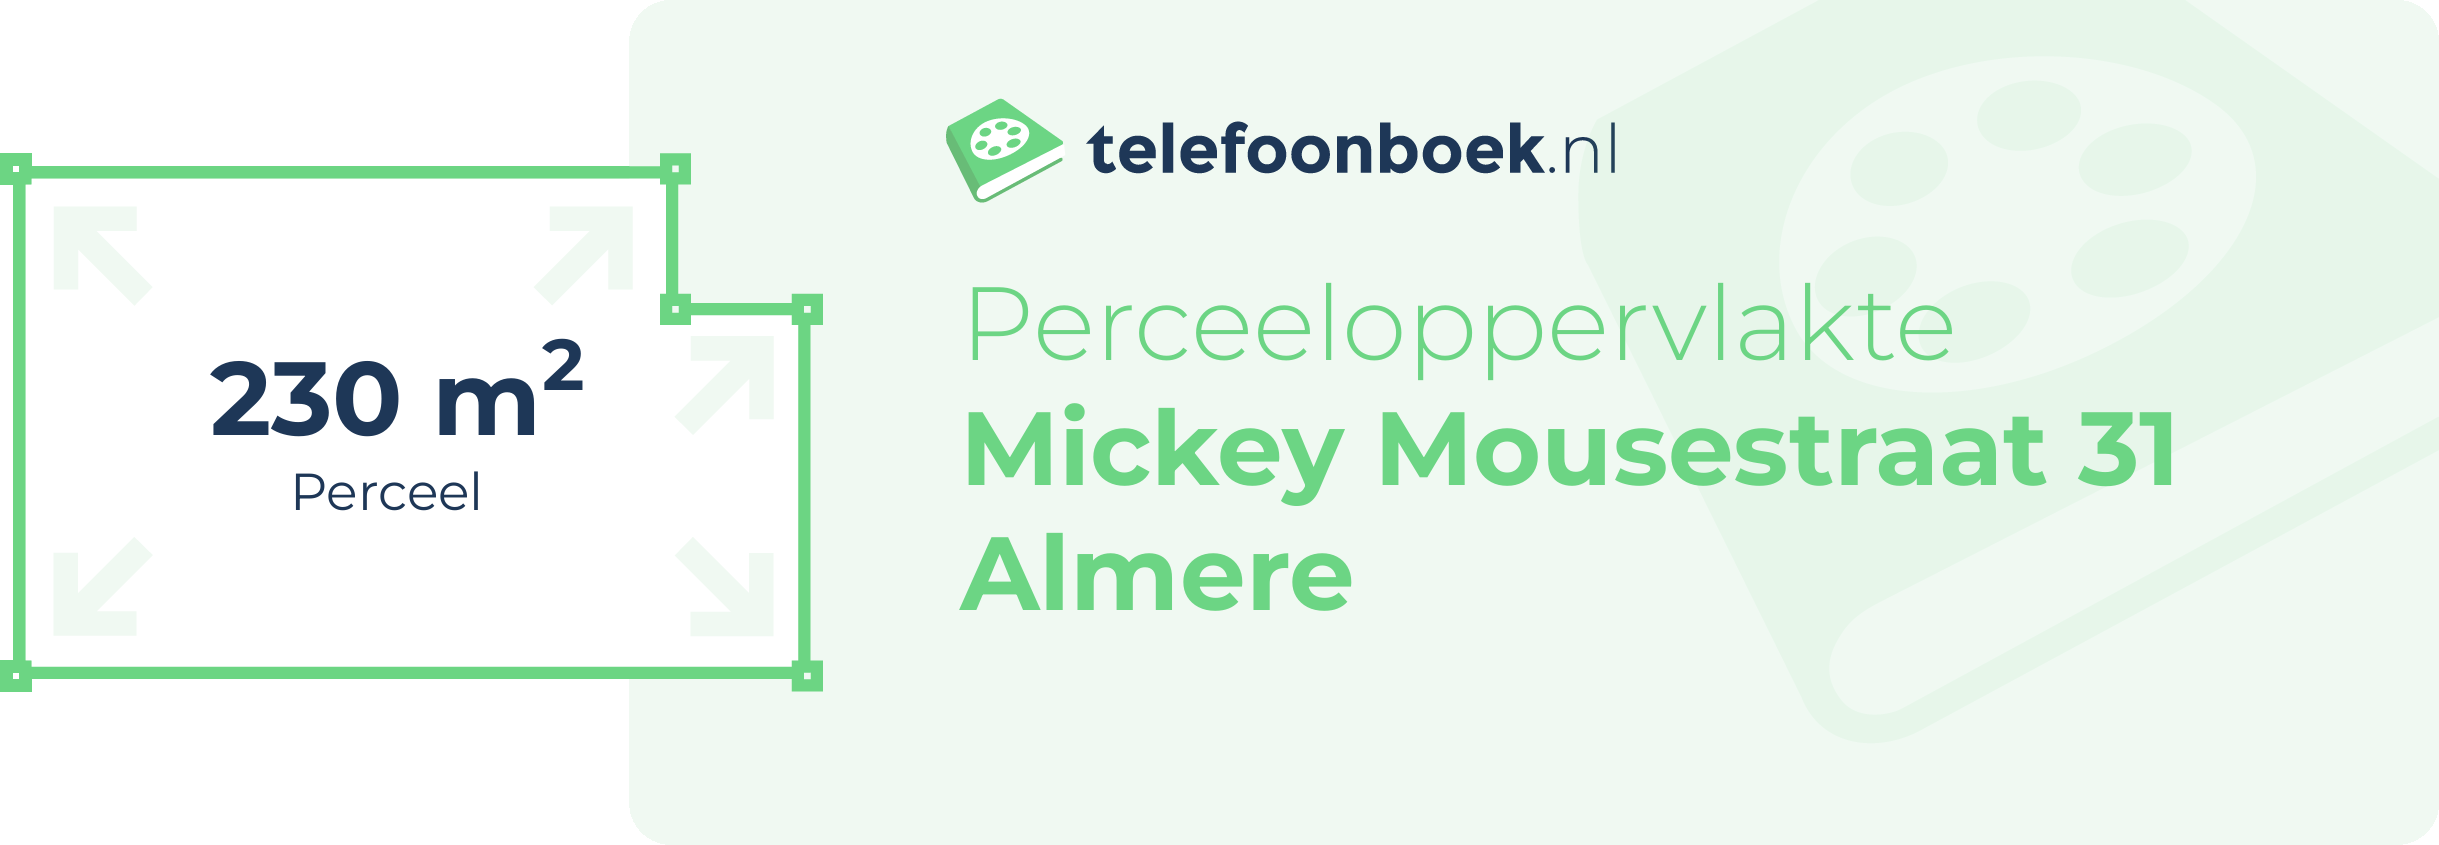 Perceeloppervlakte Mickey Mousestraat 31 Almere